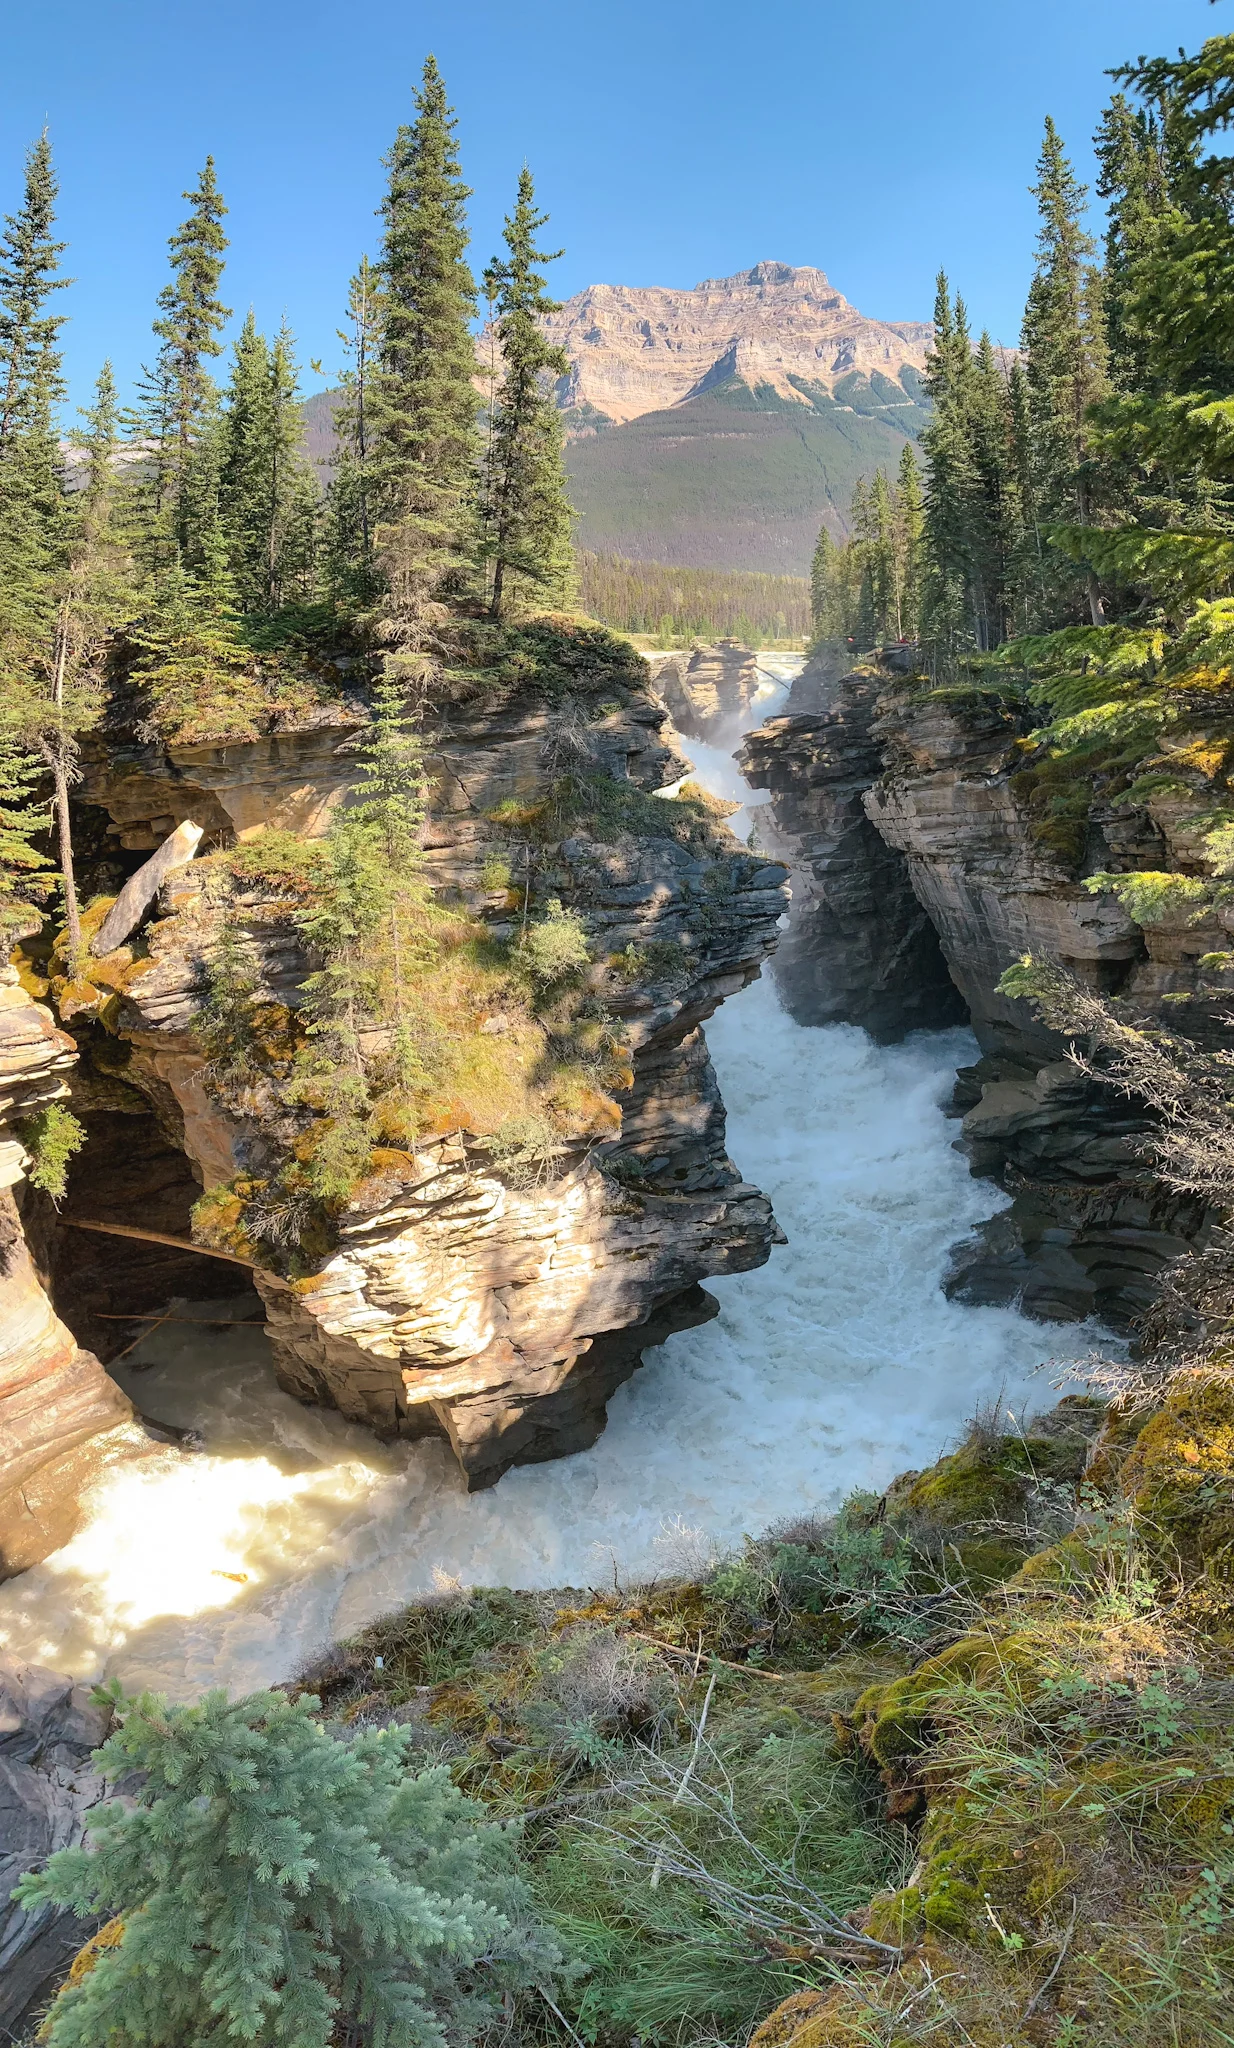 Athabasca Falls in Jasper National Park, Alberta